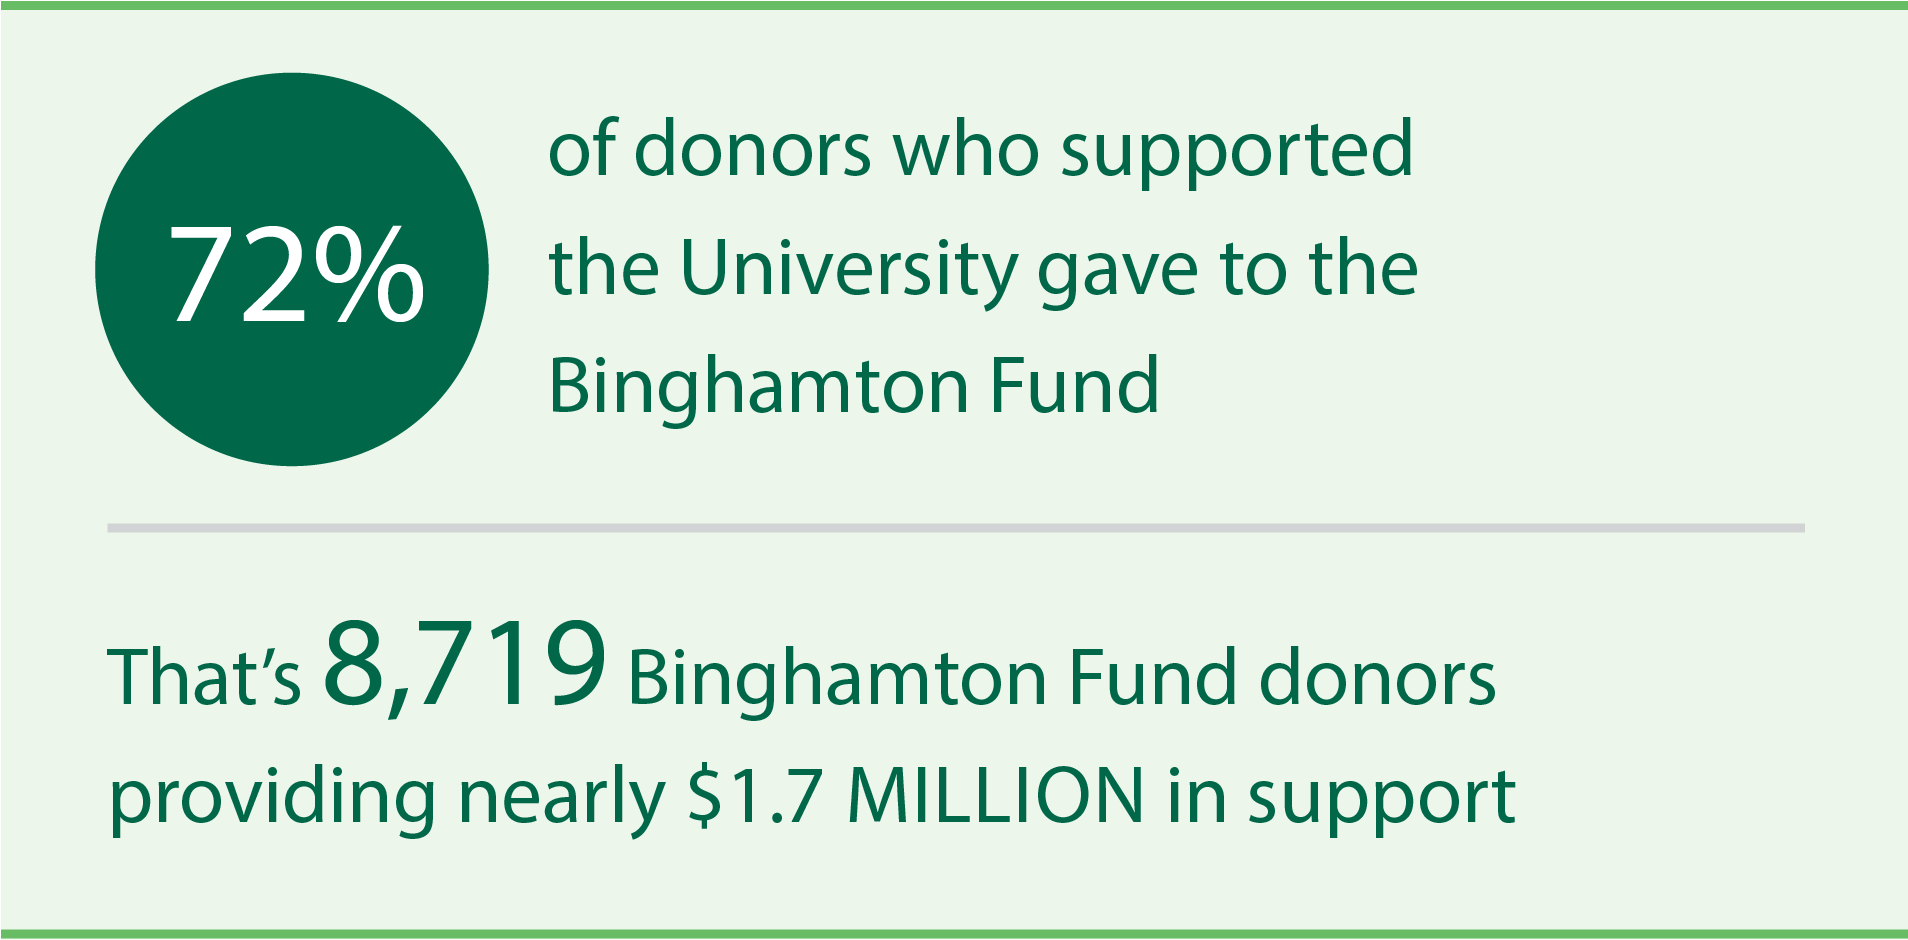 Binghamton Foundation donors